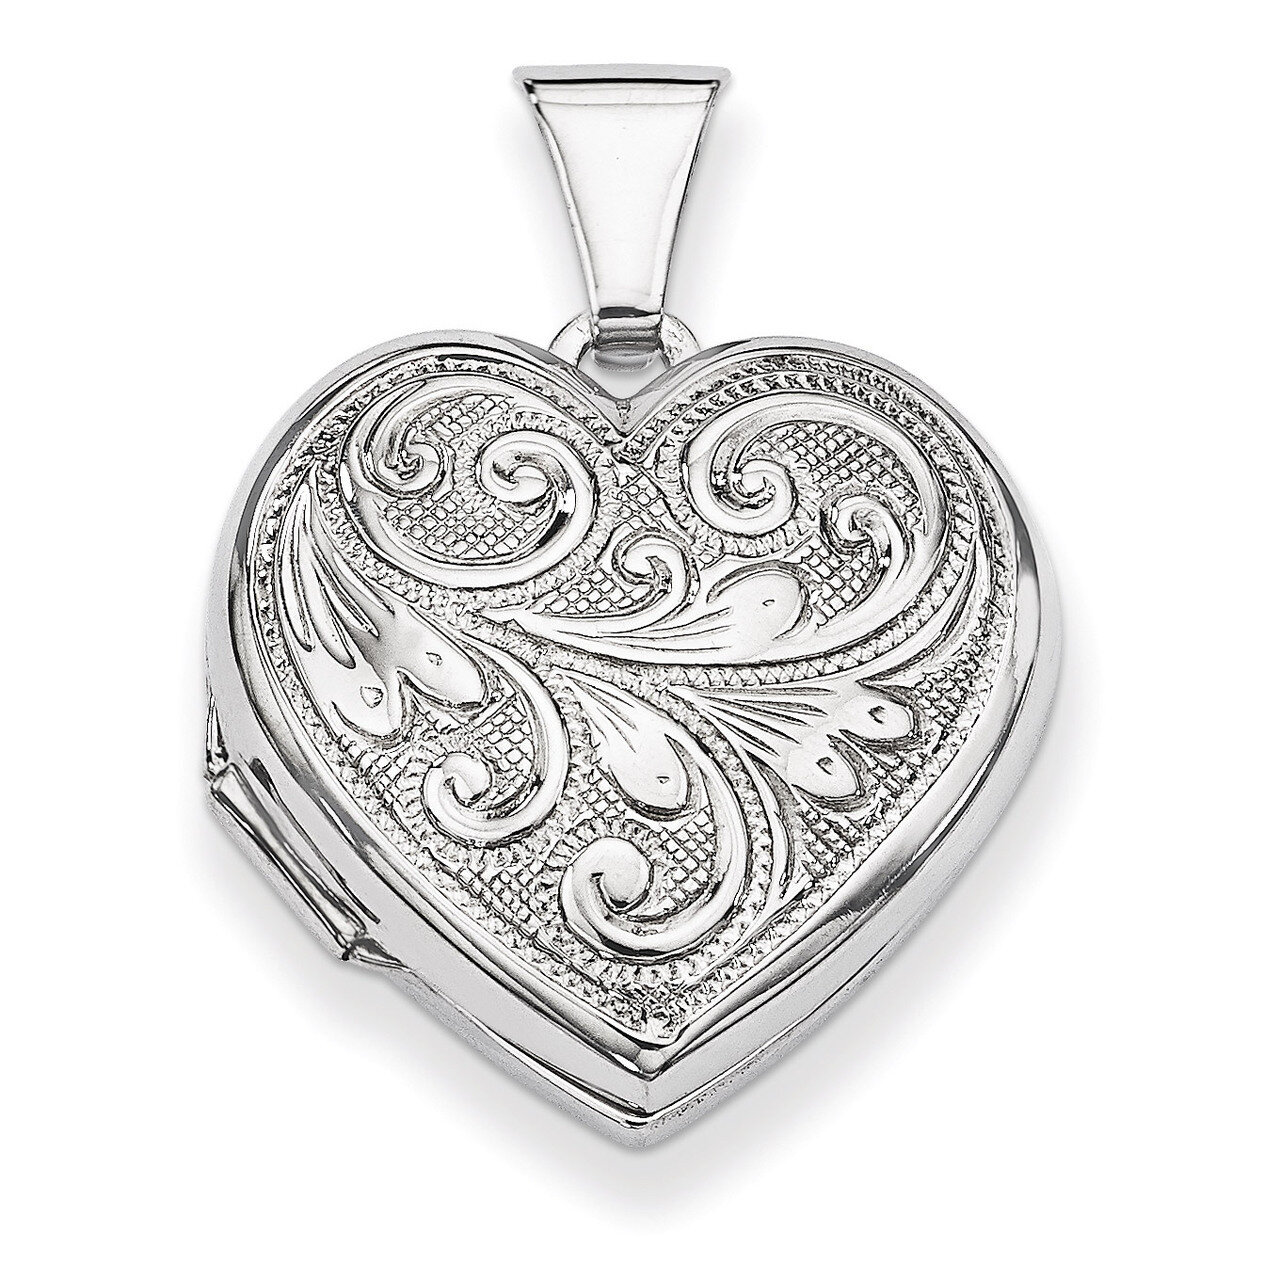 Scrolled Front & Back Heart Locket Sterling Silver QLS48